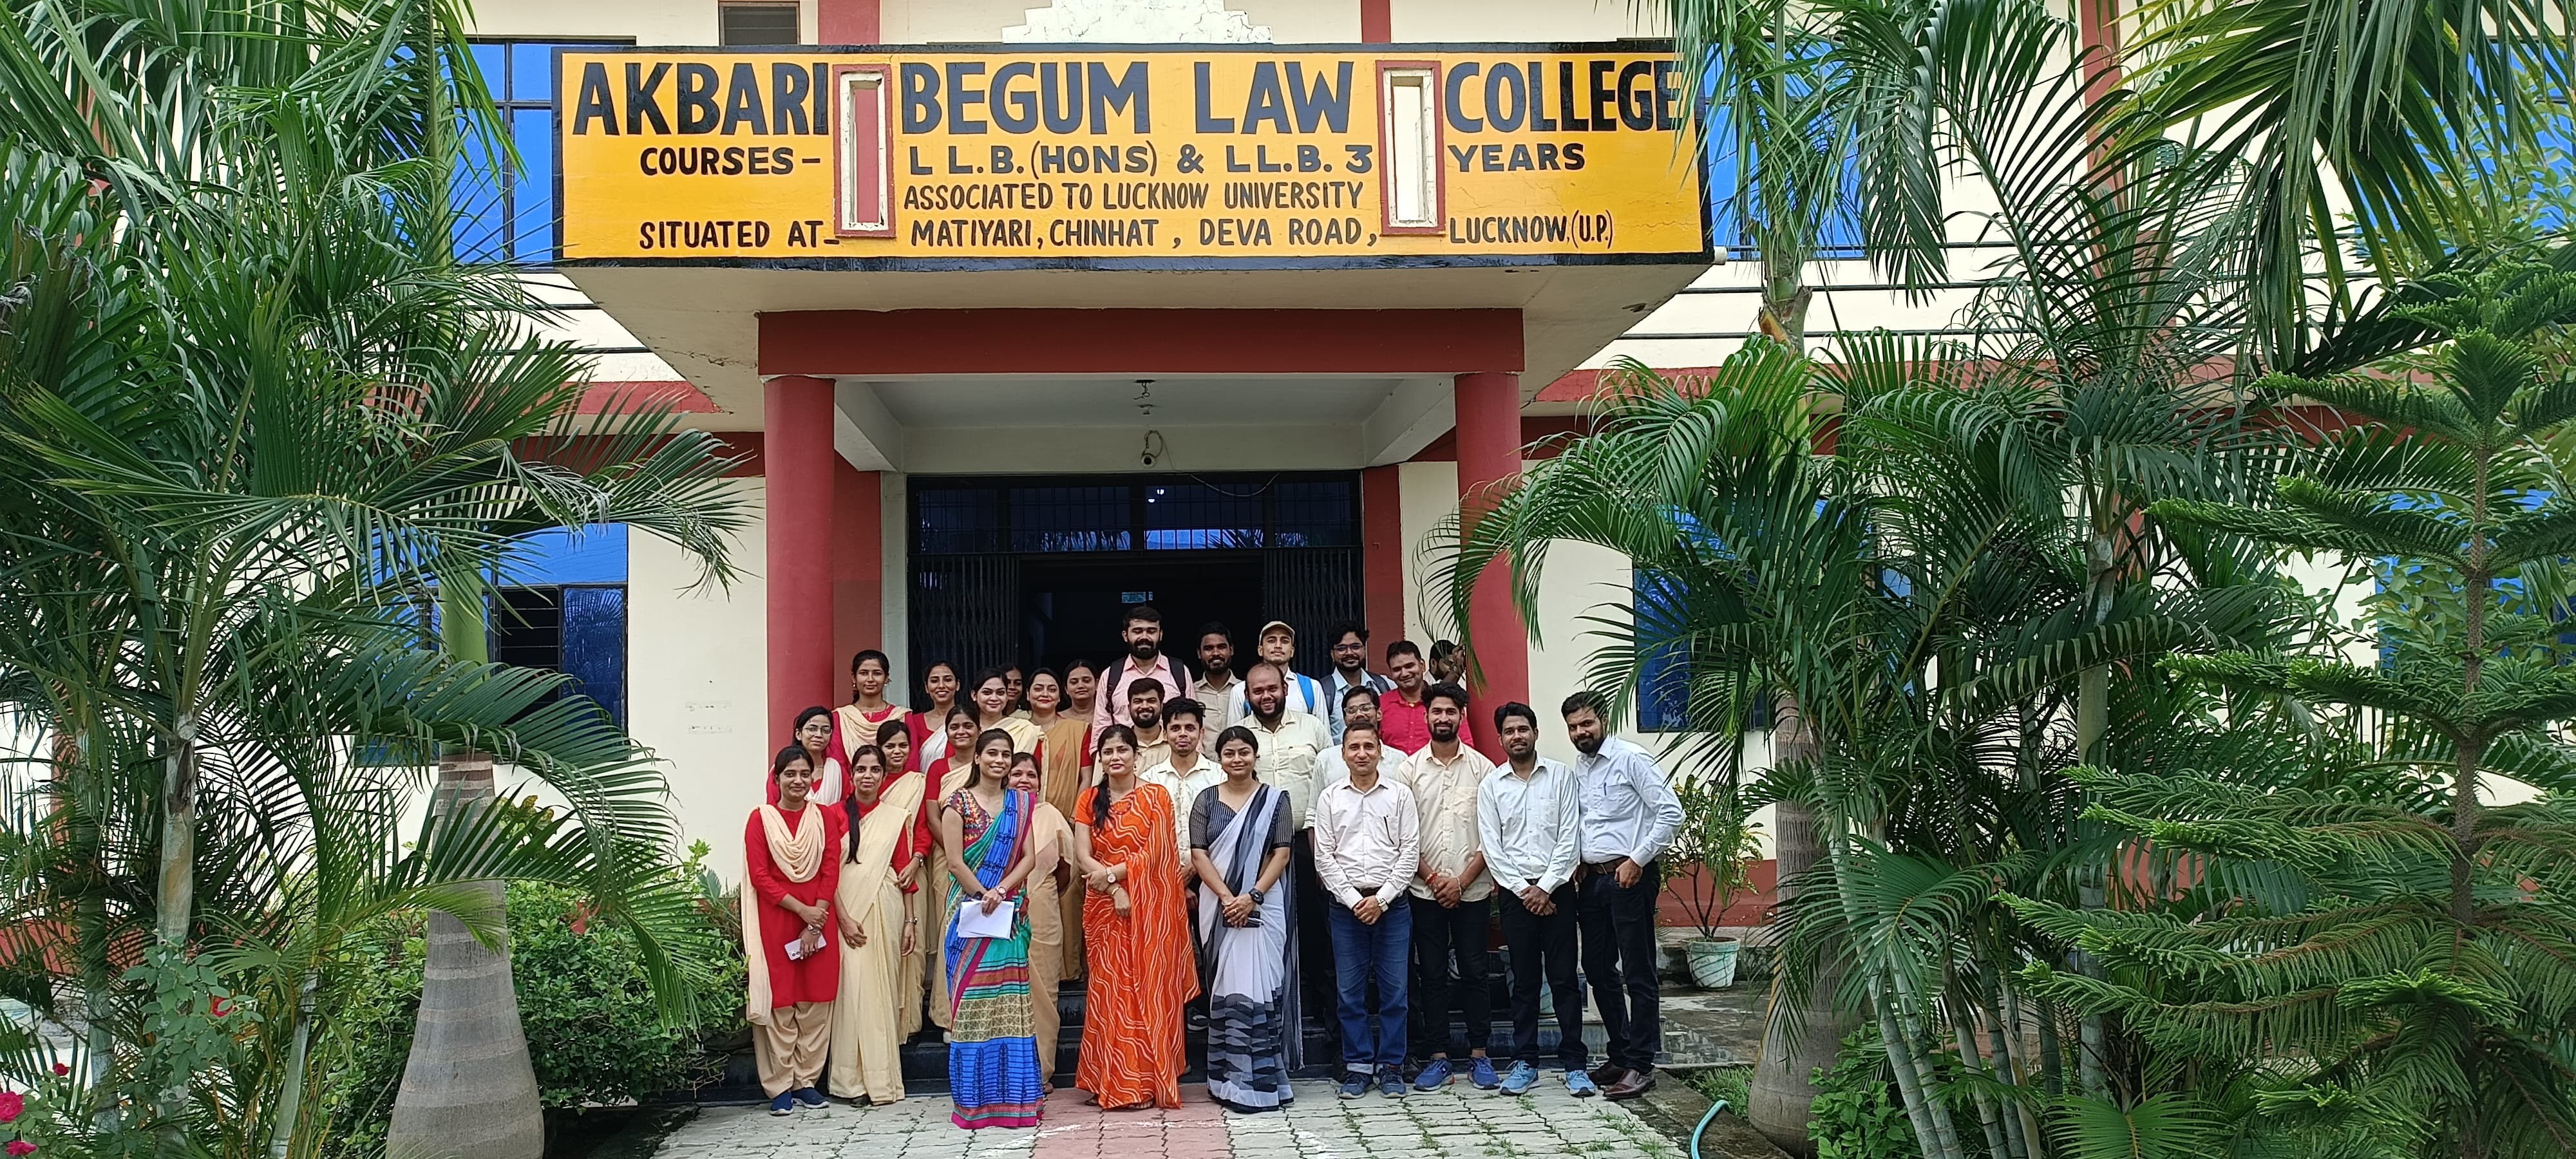 Akbari Begum College of Education, Lucknow